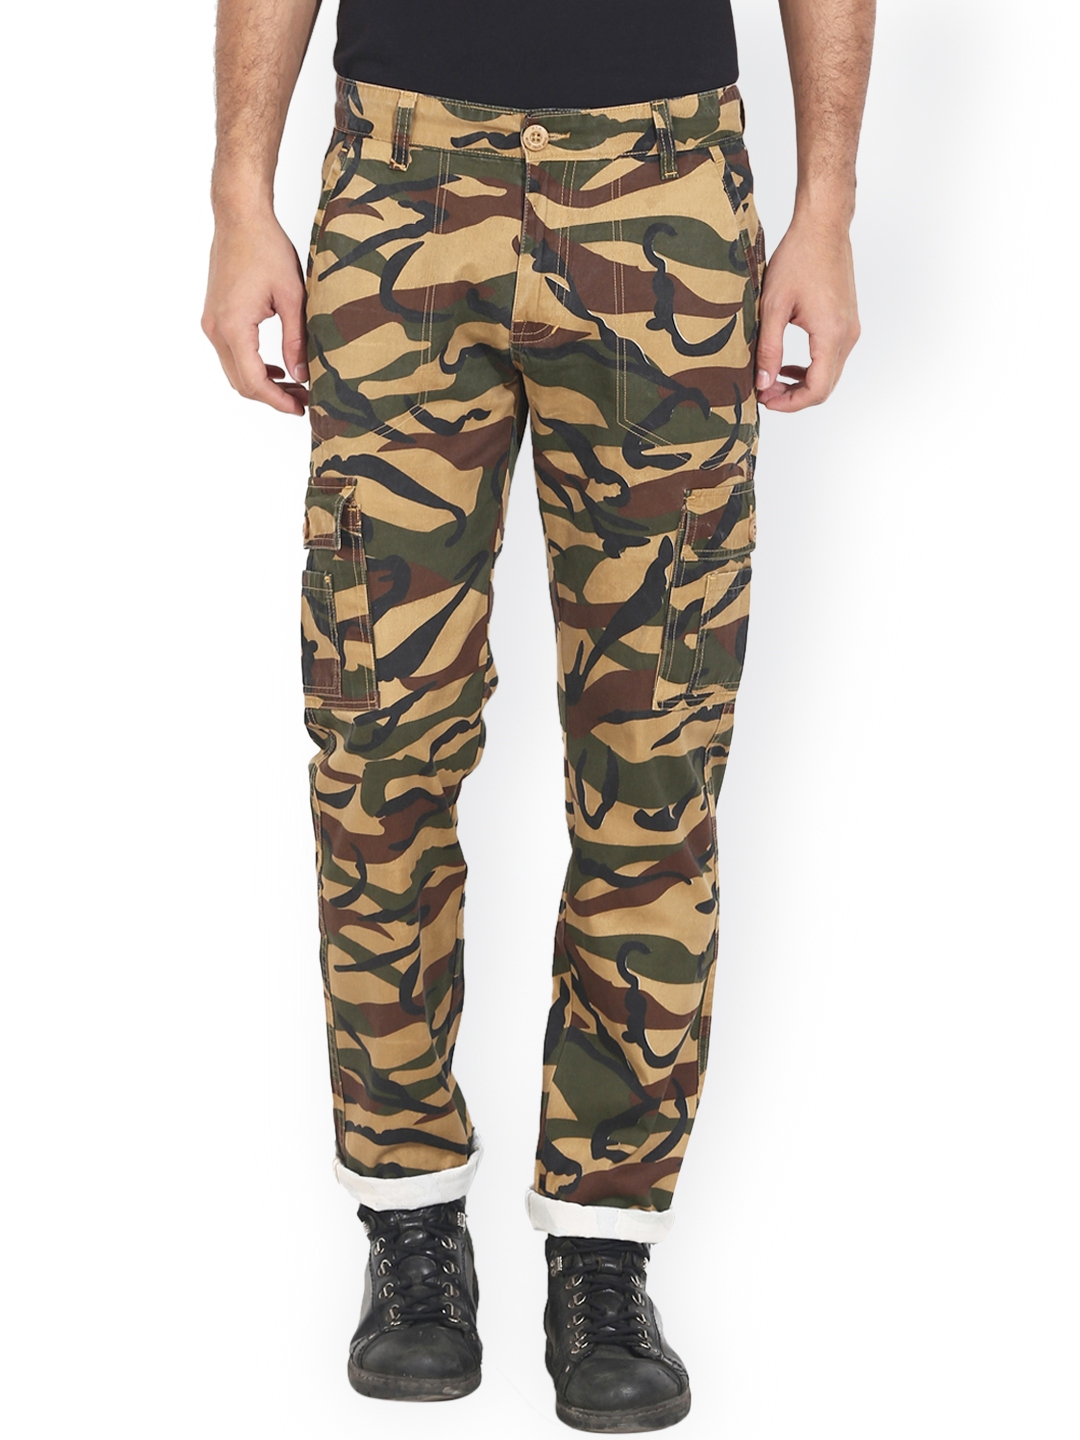 Men Cargo Trousers Pants Army Military Camo Print SG300  Camo Grey